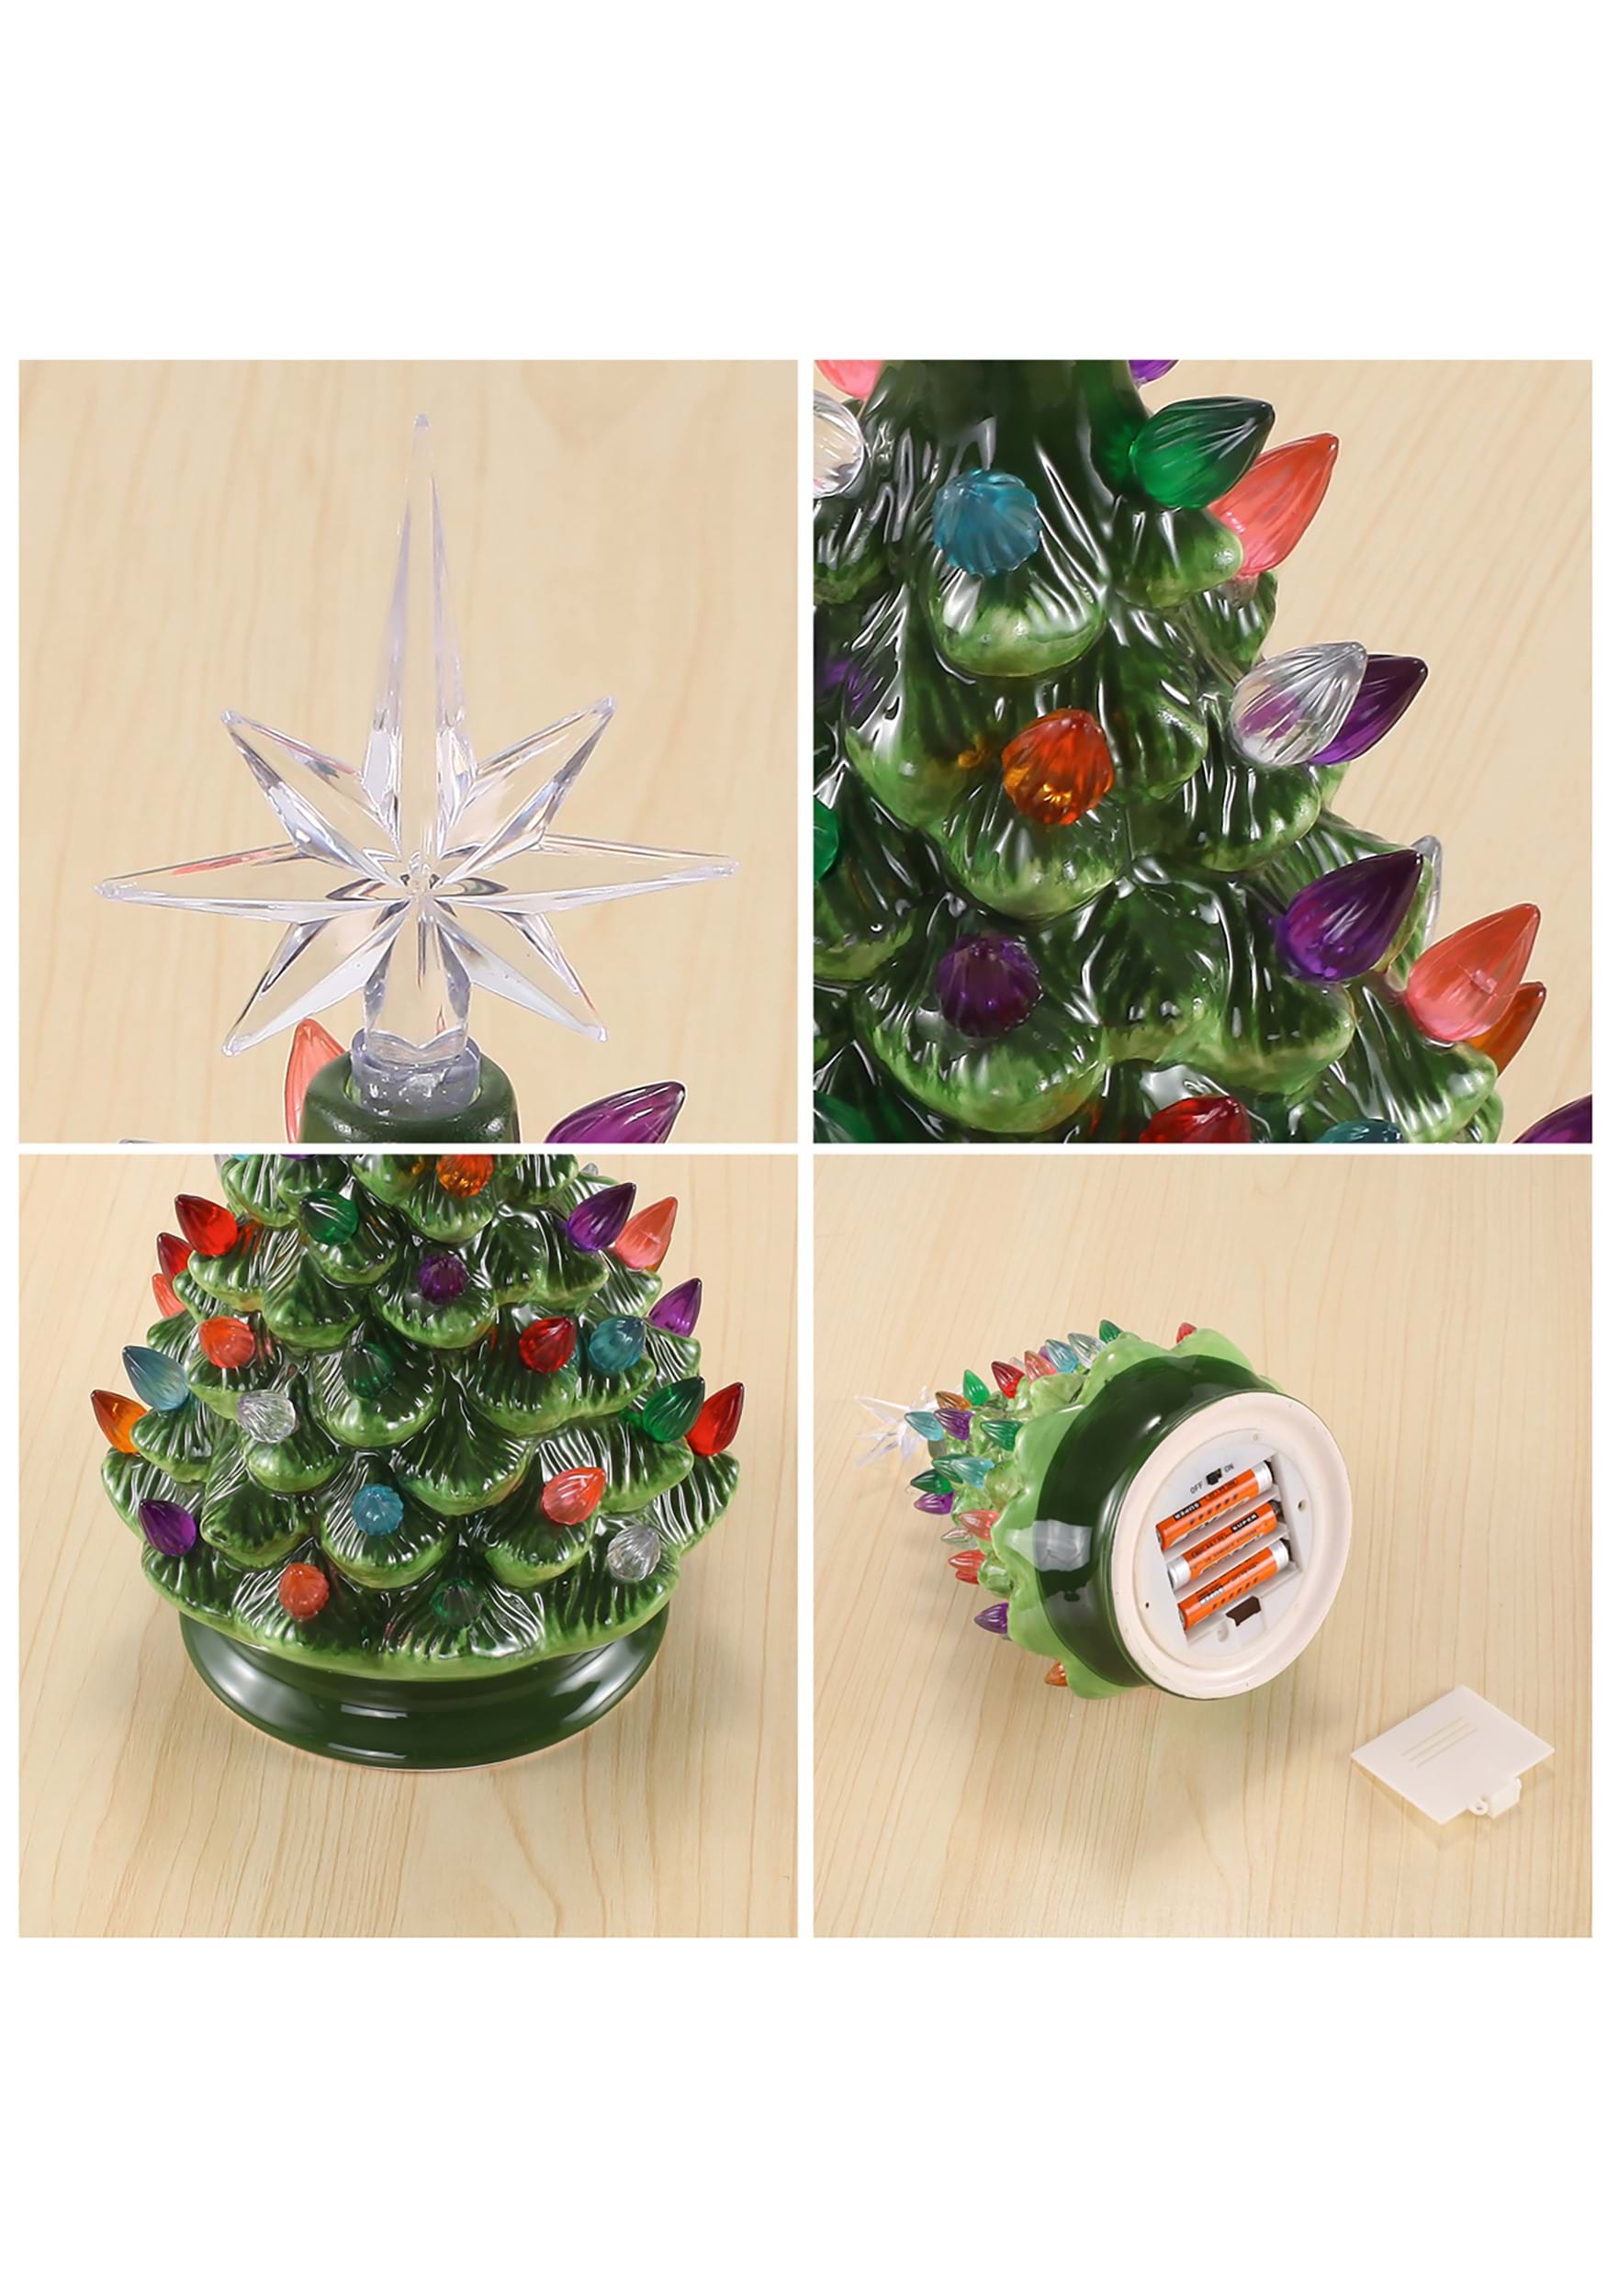 10 Inch Tabletop Ceramic Christmas Tree , Christmas Decorations